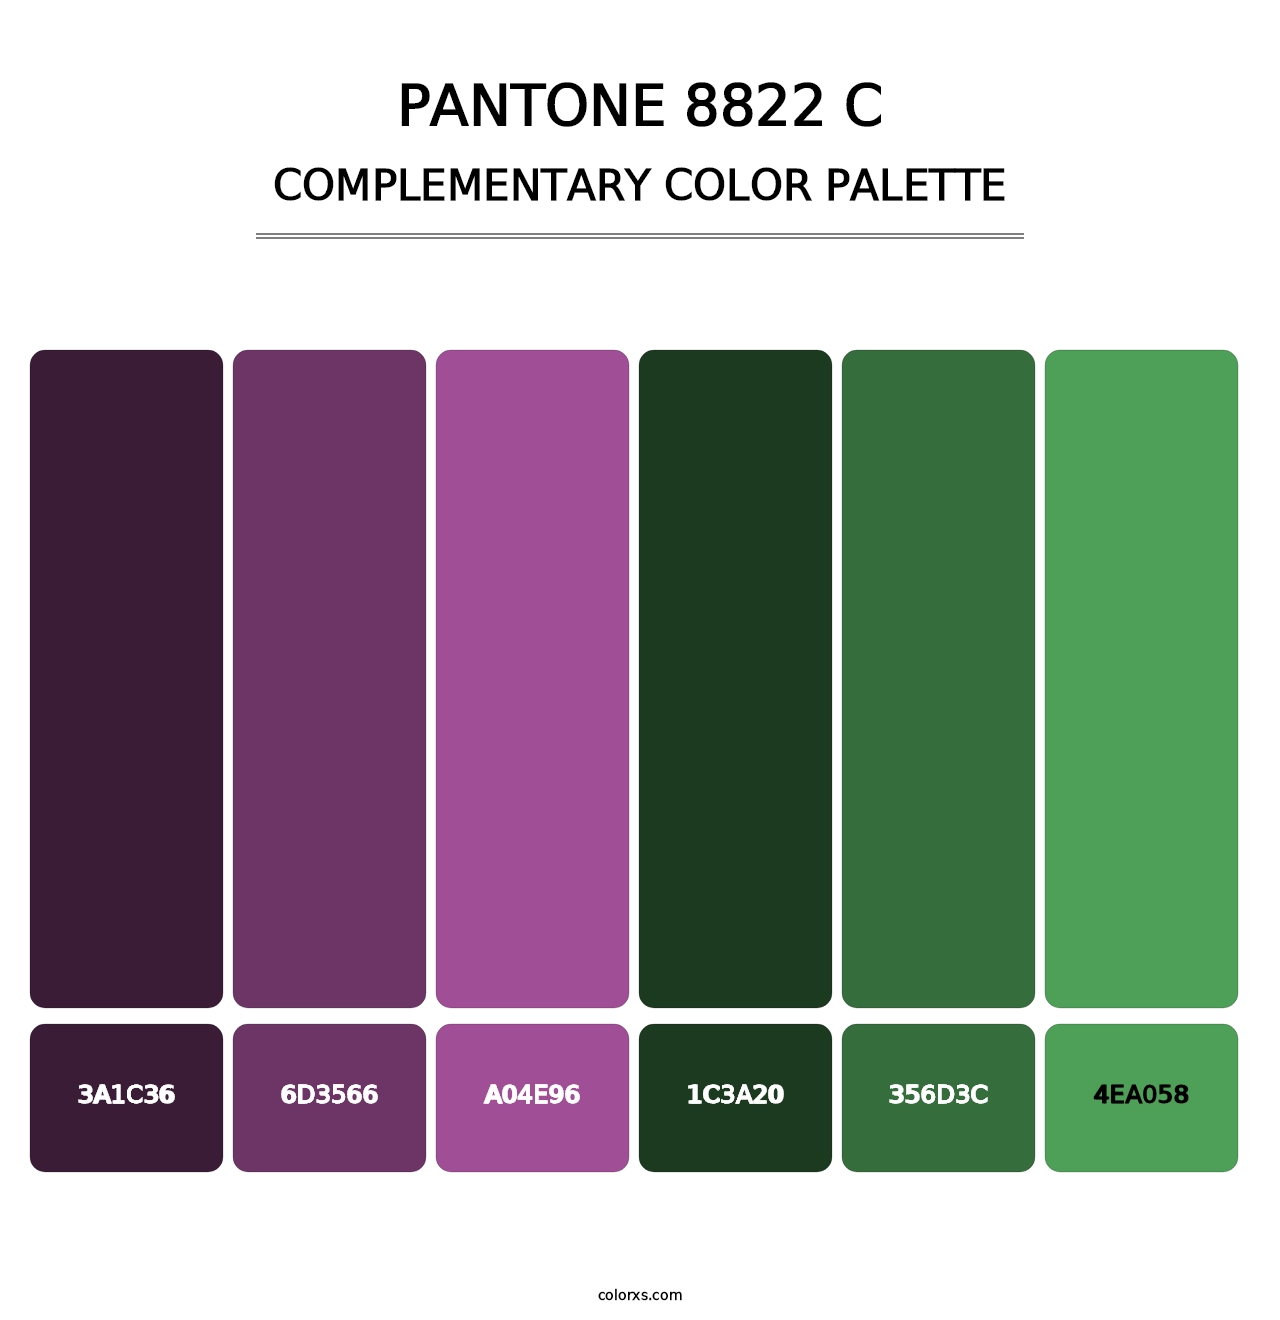 PANTONE 8822 C - Complementary Color Palette